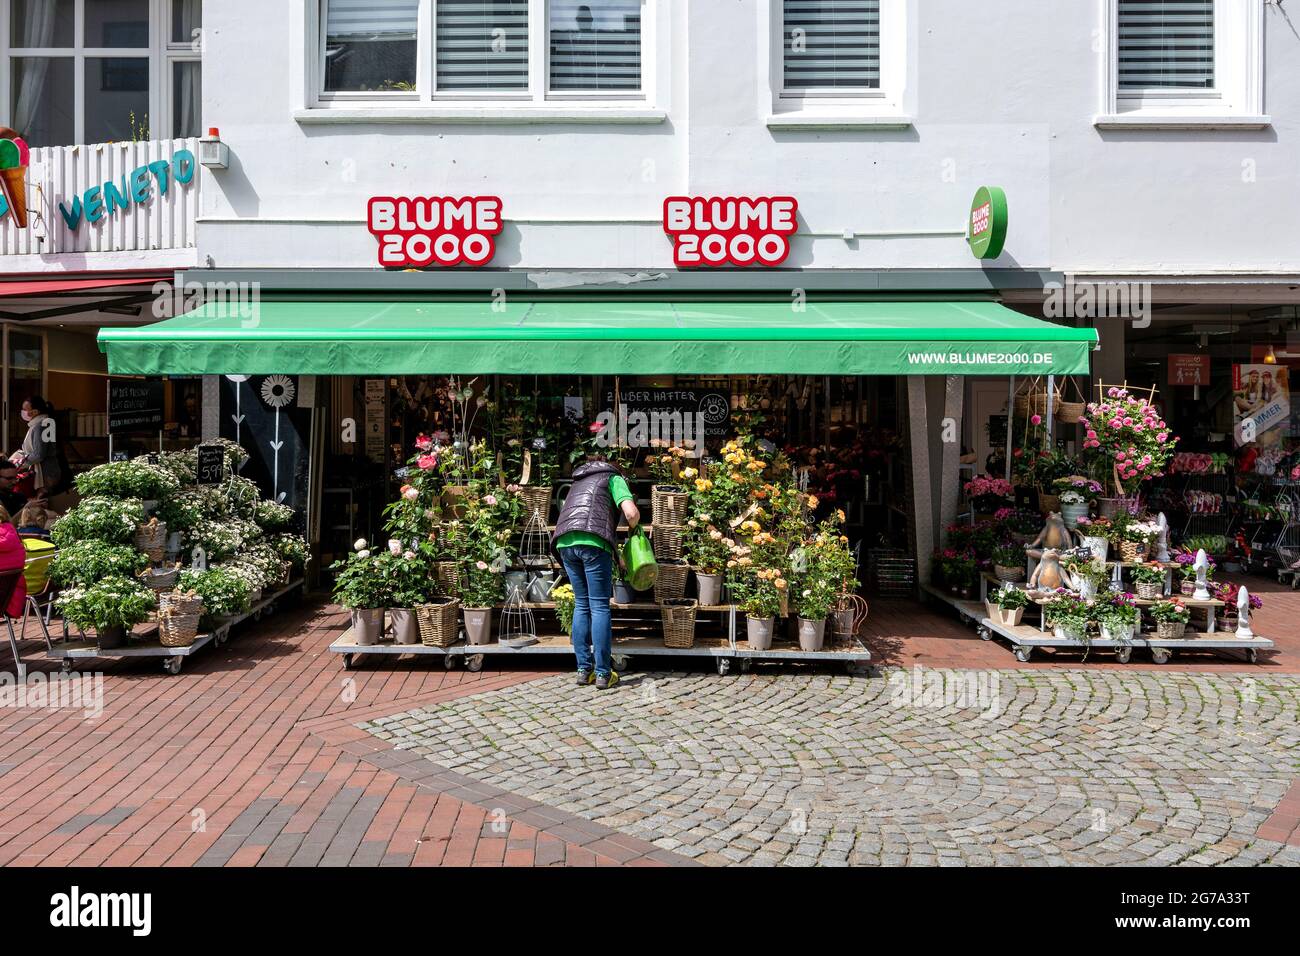 Blume 2000 flower shop in Schleswig, Germany Stock Photo